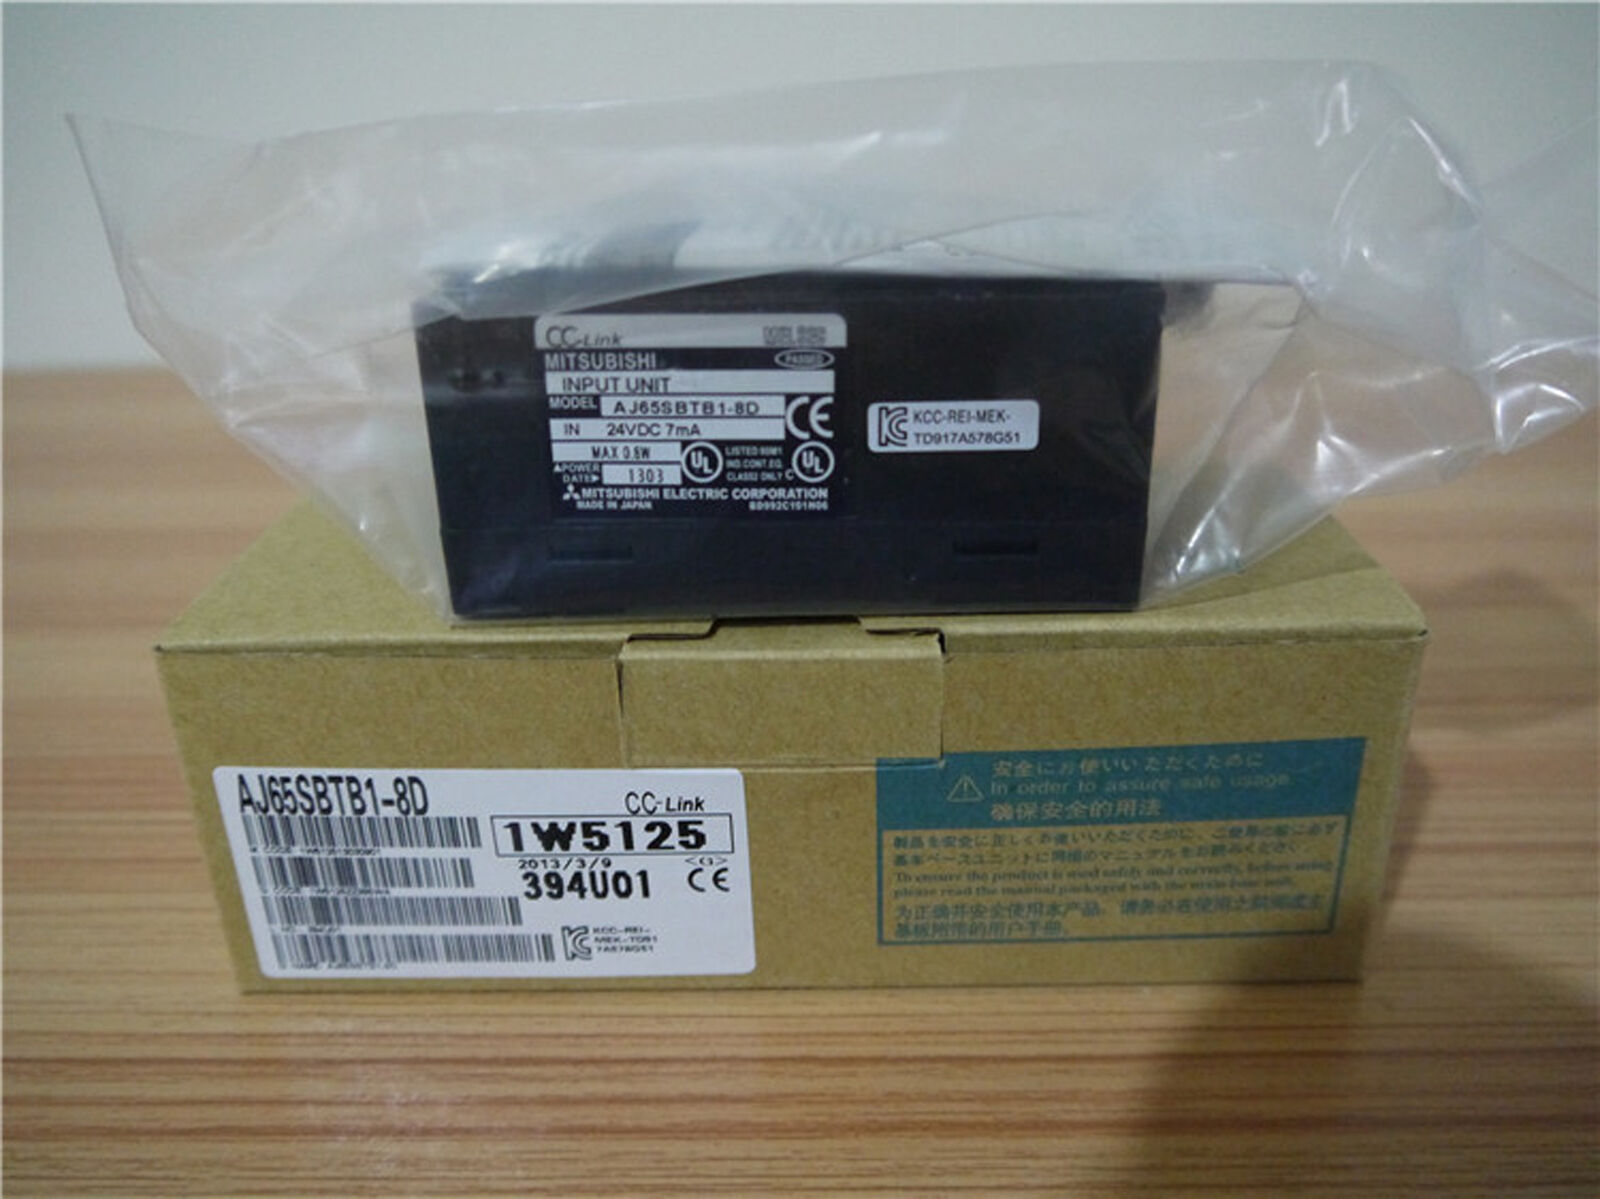 1PC MITSUBISHI PLC AJ65SBTB1-8D New In Box AJ65SBTB18D Expedited Shipping